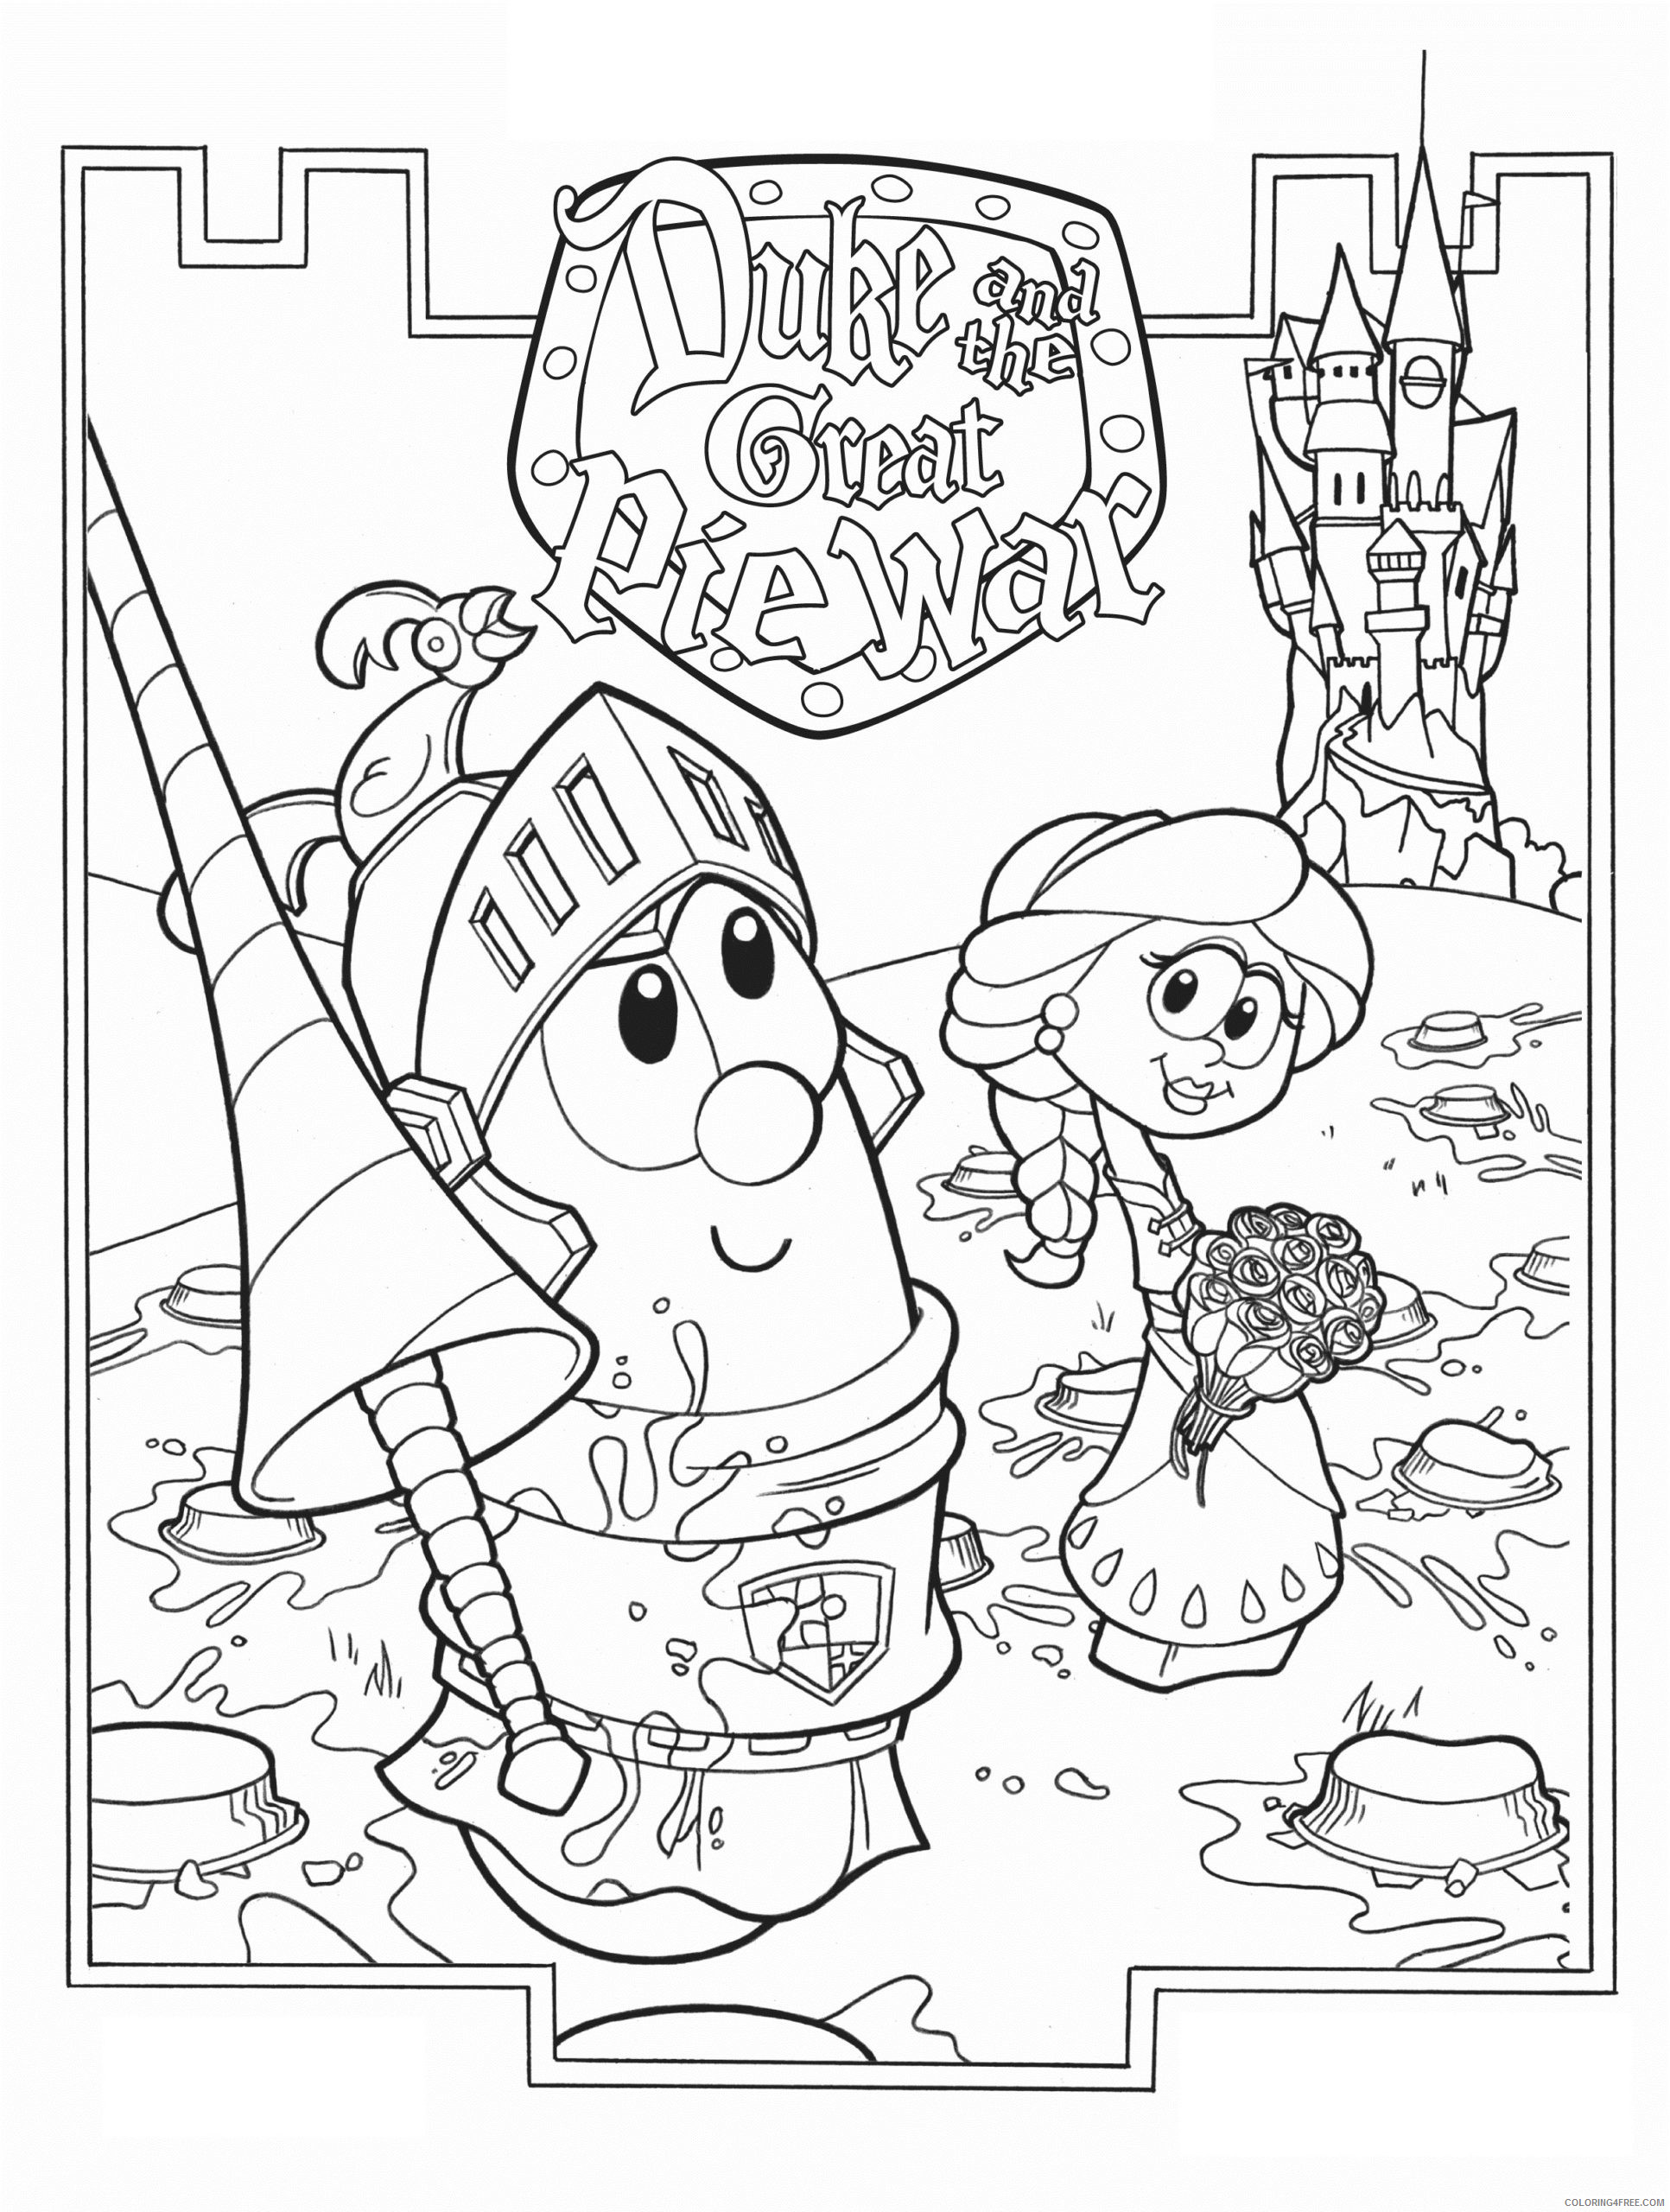 VeggieTales Coloring Pages Cartoons Printable Veggie Tales For Kids Printable 2020 6812 Coloring4free